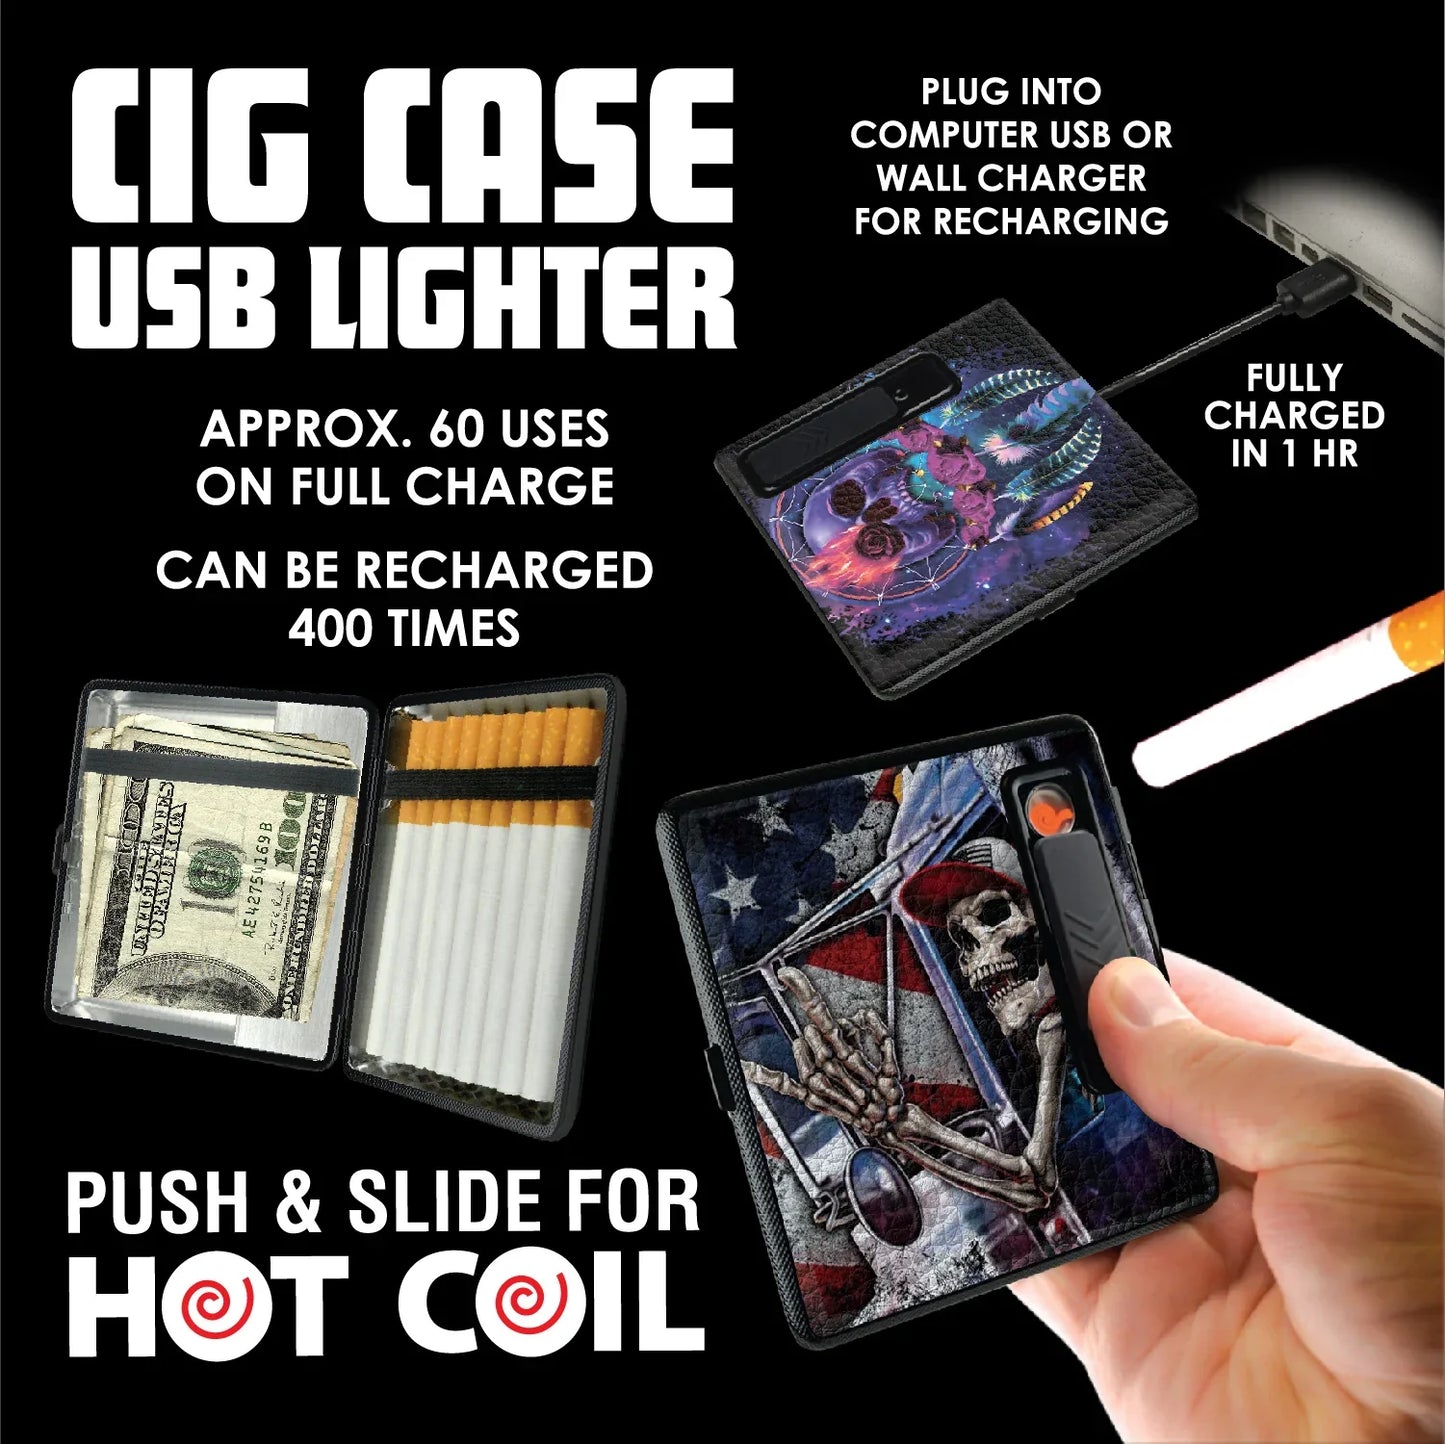 CIG CASE USB LIGHTER 23521